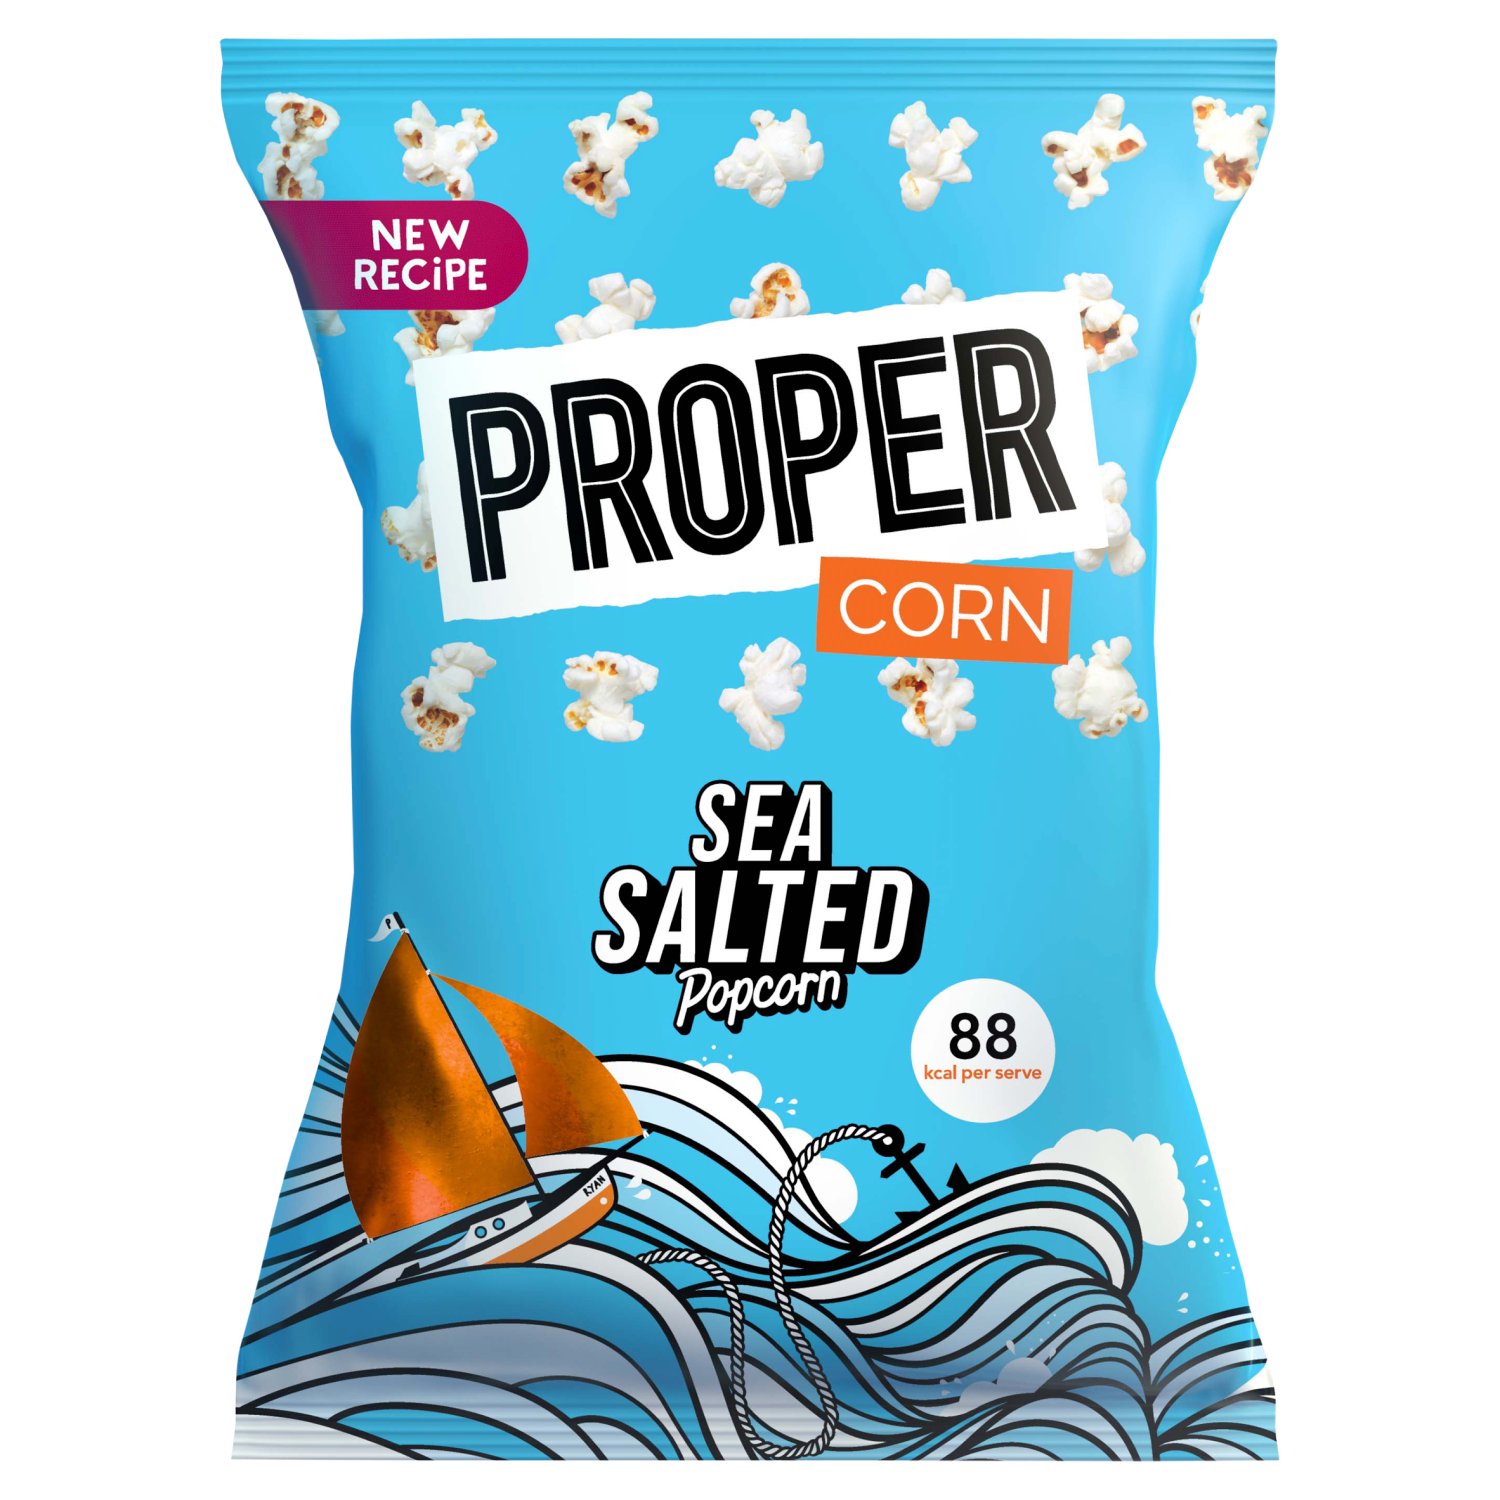 Proper Corn Lightly Sea Salted Popcorn (70 g)